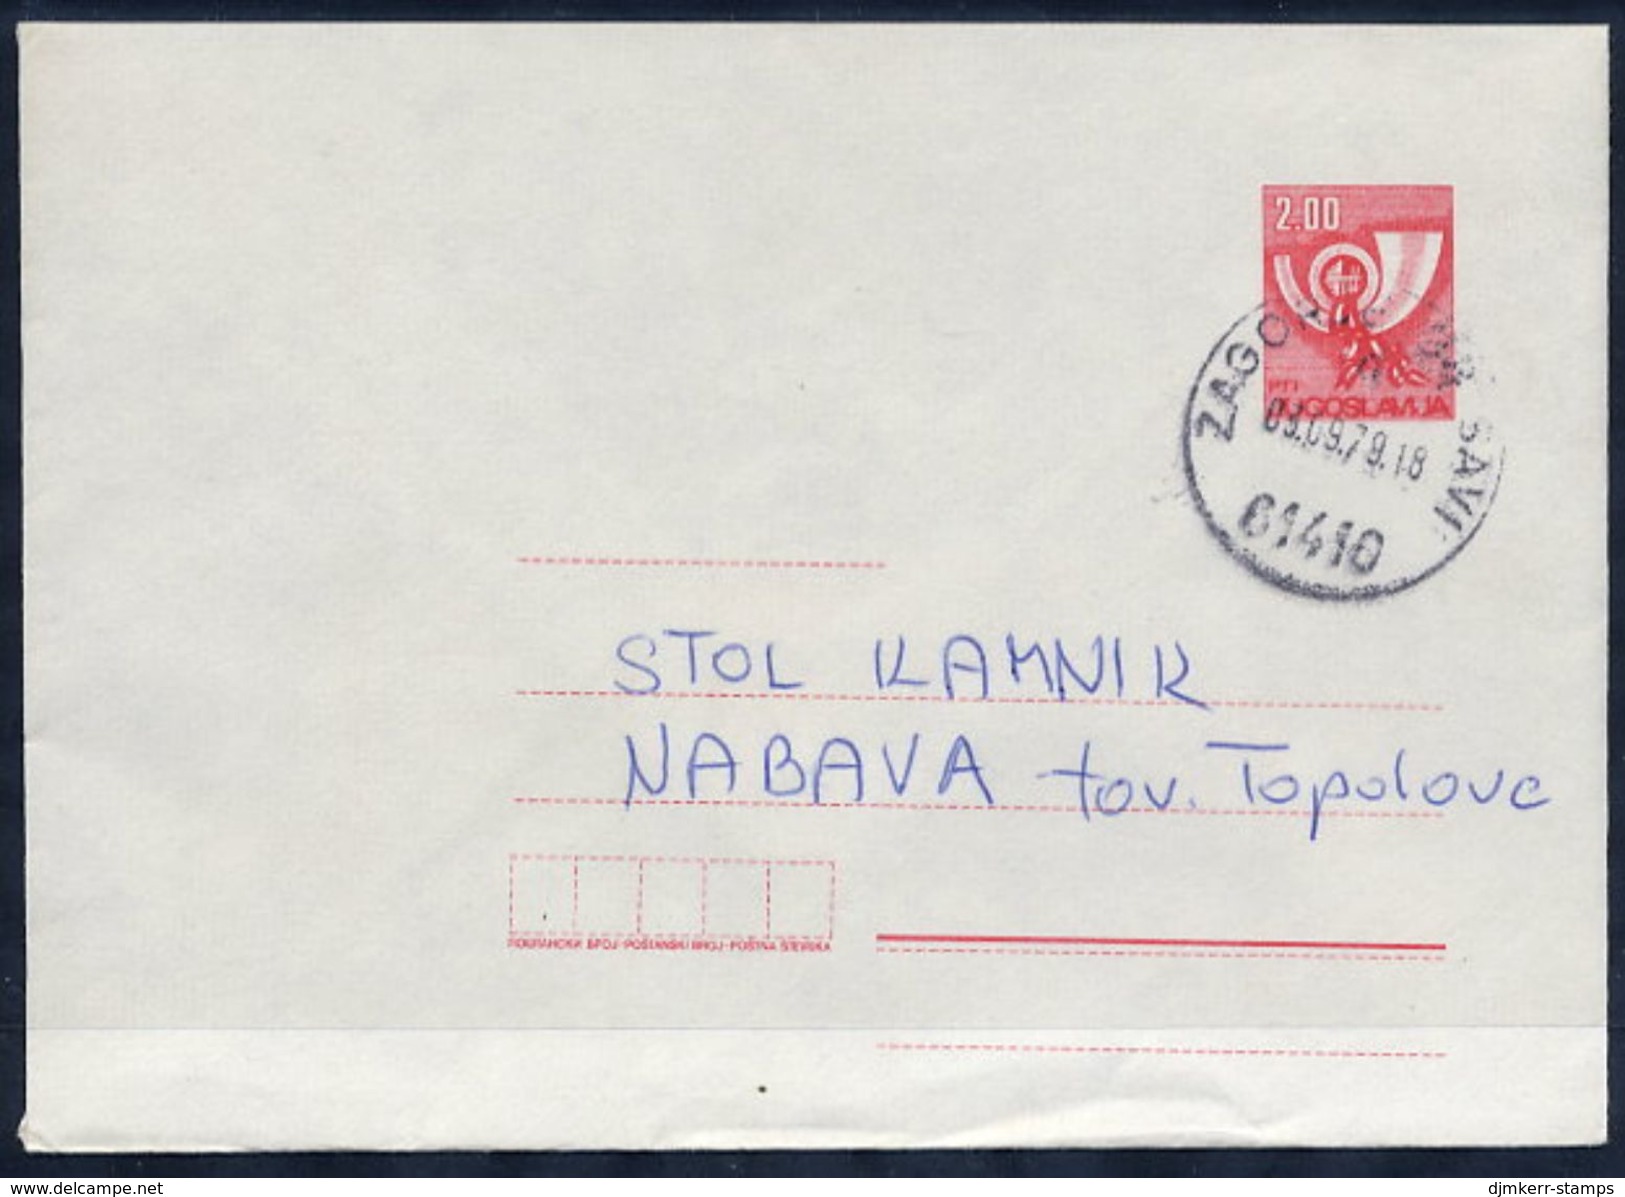 YUGOSLAVIA 1978 Posthorn 2 D.stationery Envelope Used Without Additional Franking.  Michel U71 - Ganzsachen